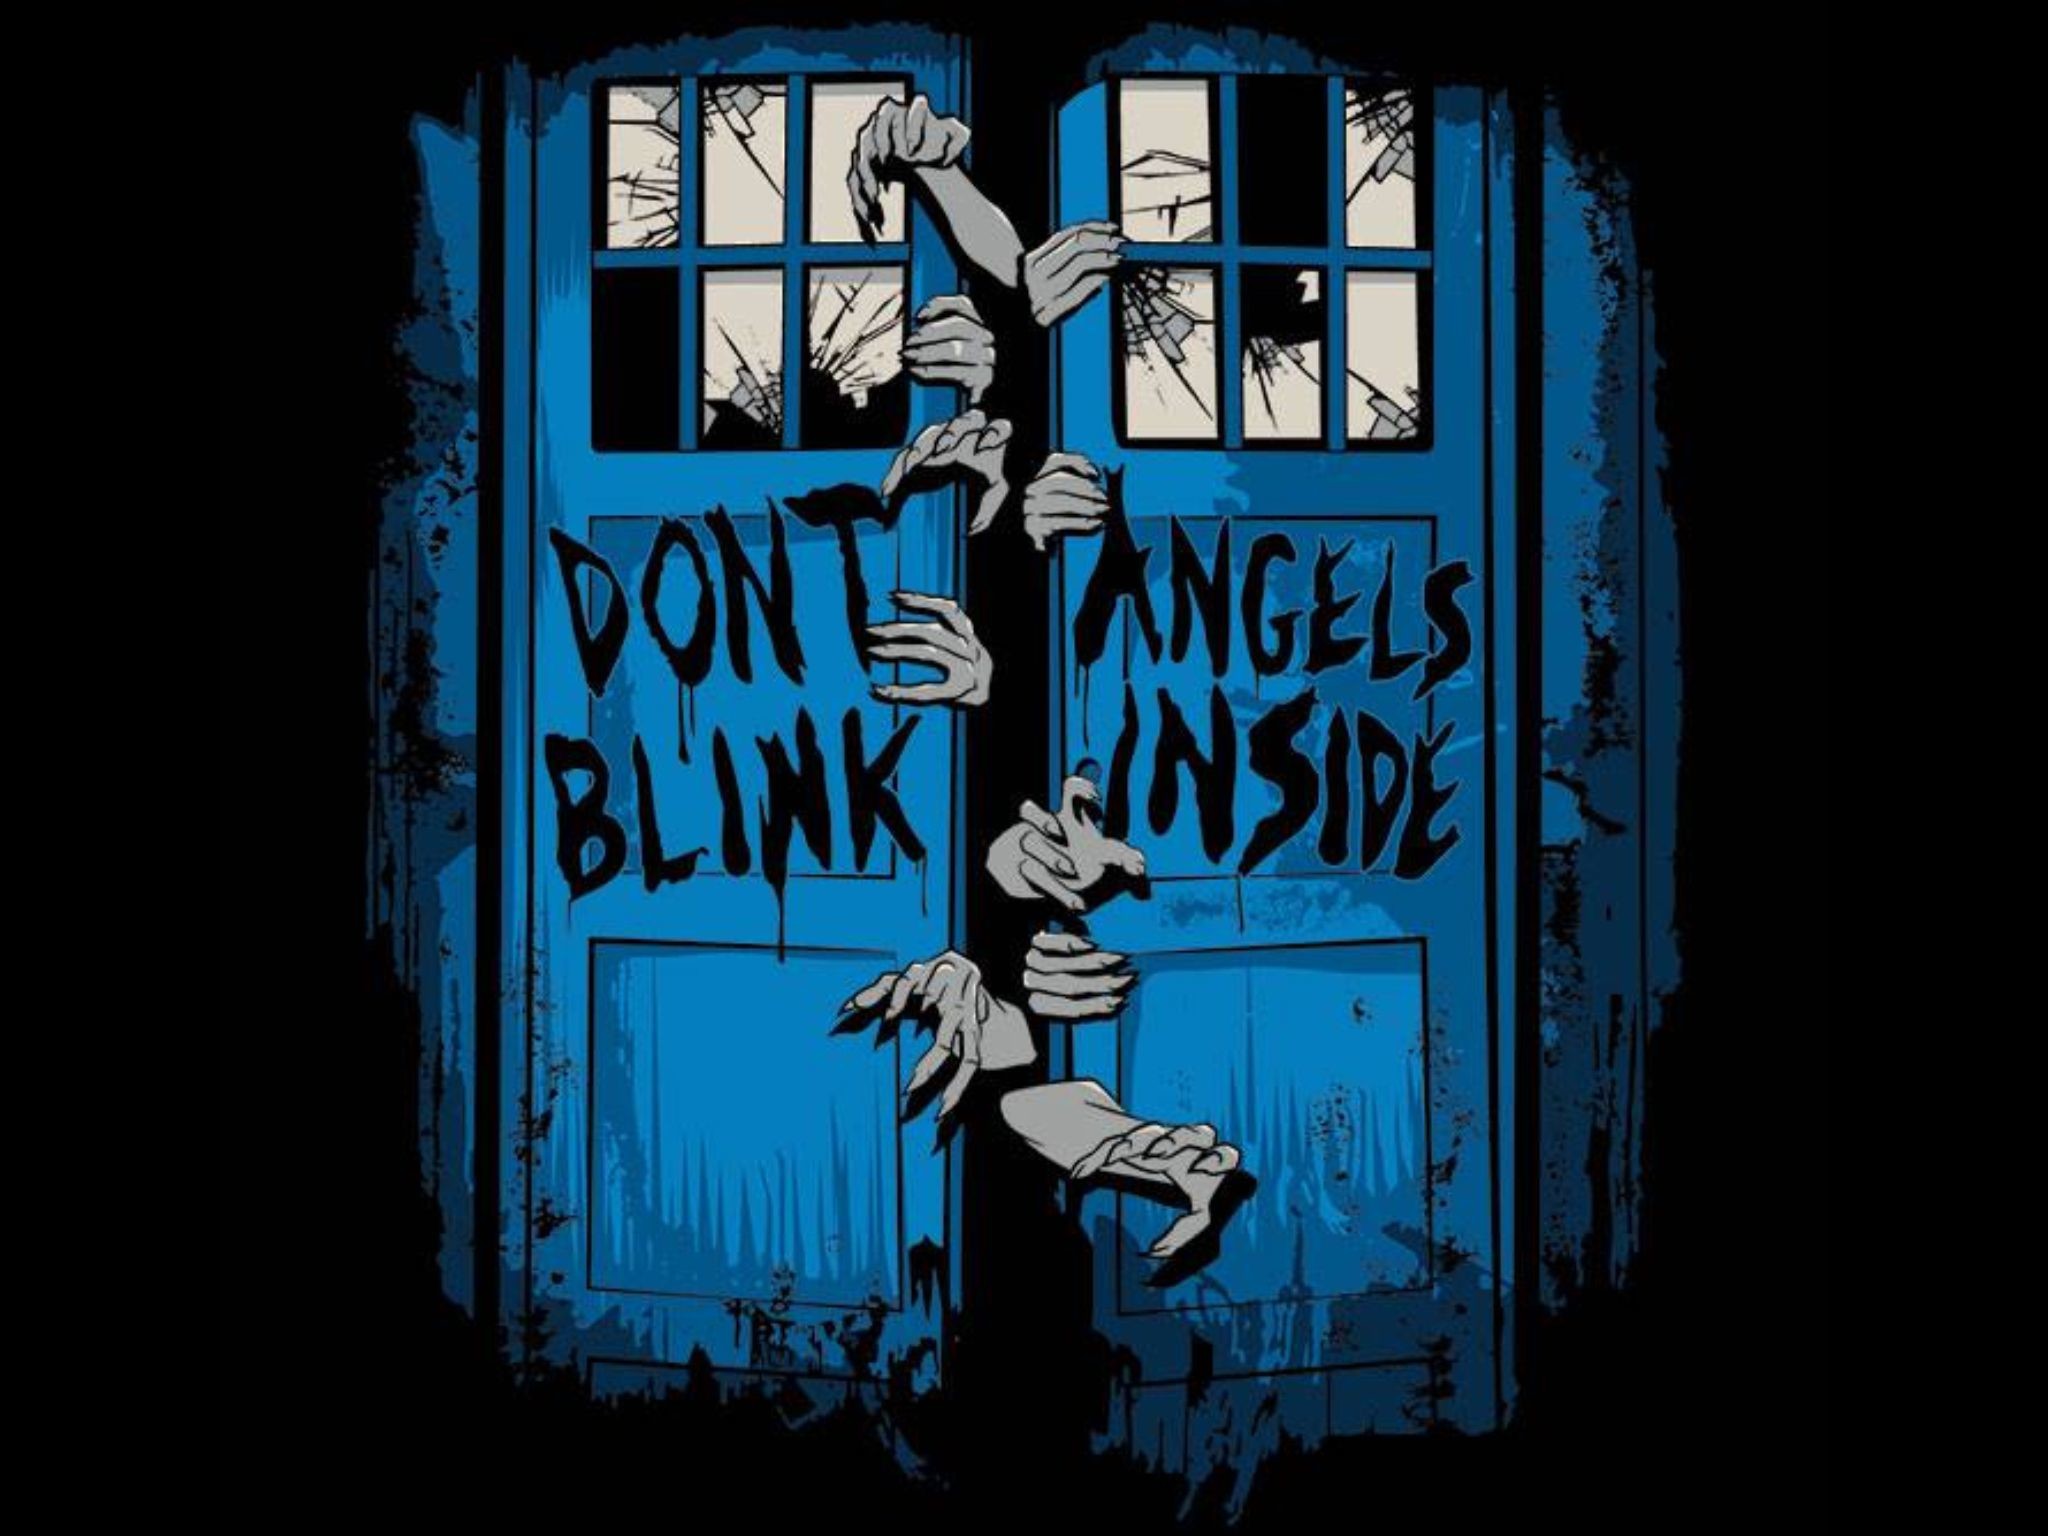 2048x1536 Don't Blink, Angels inside